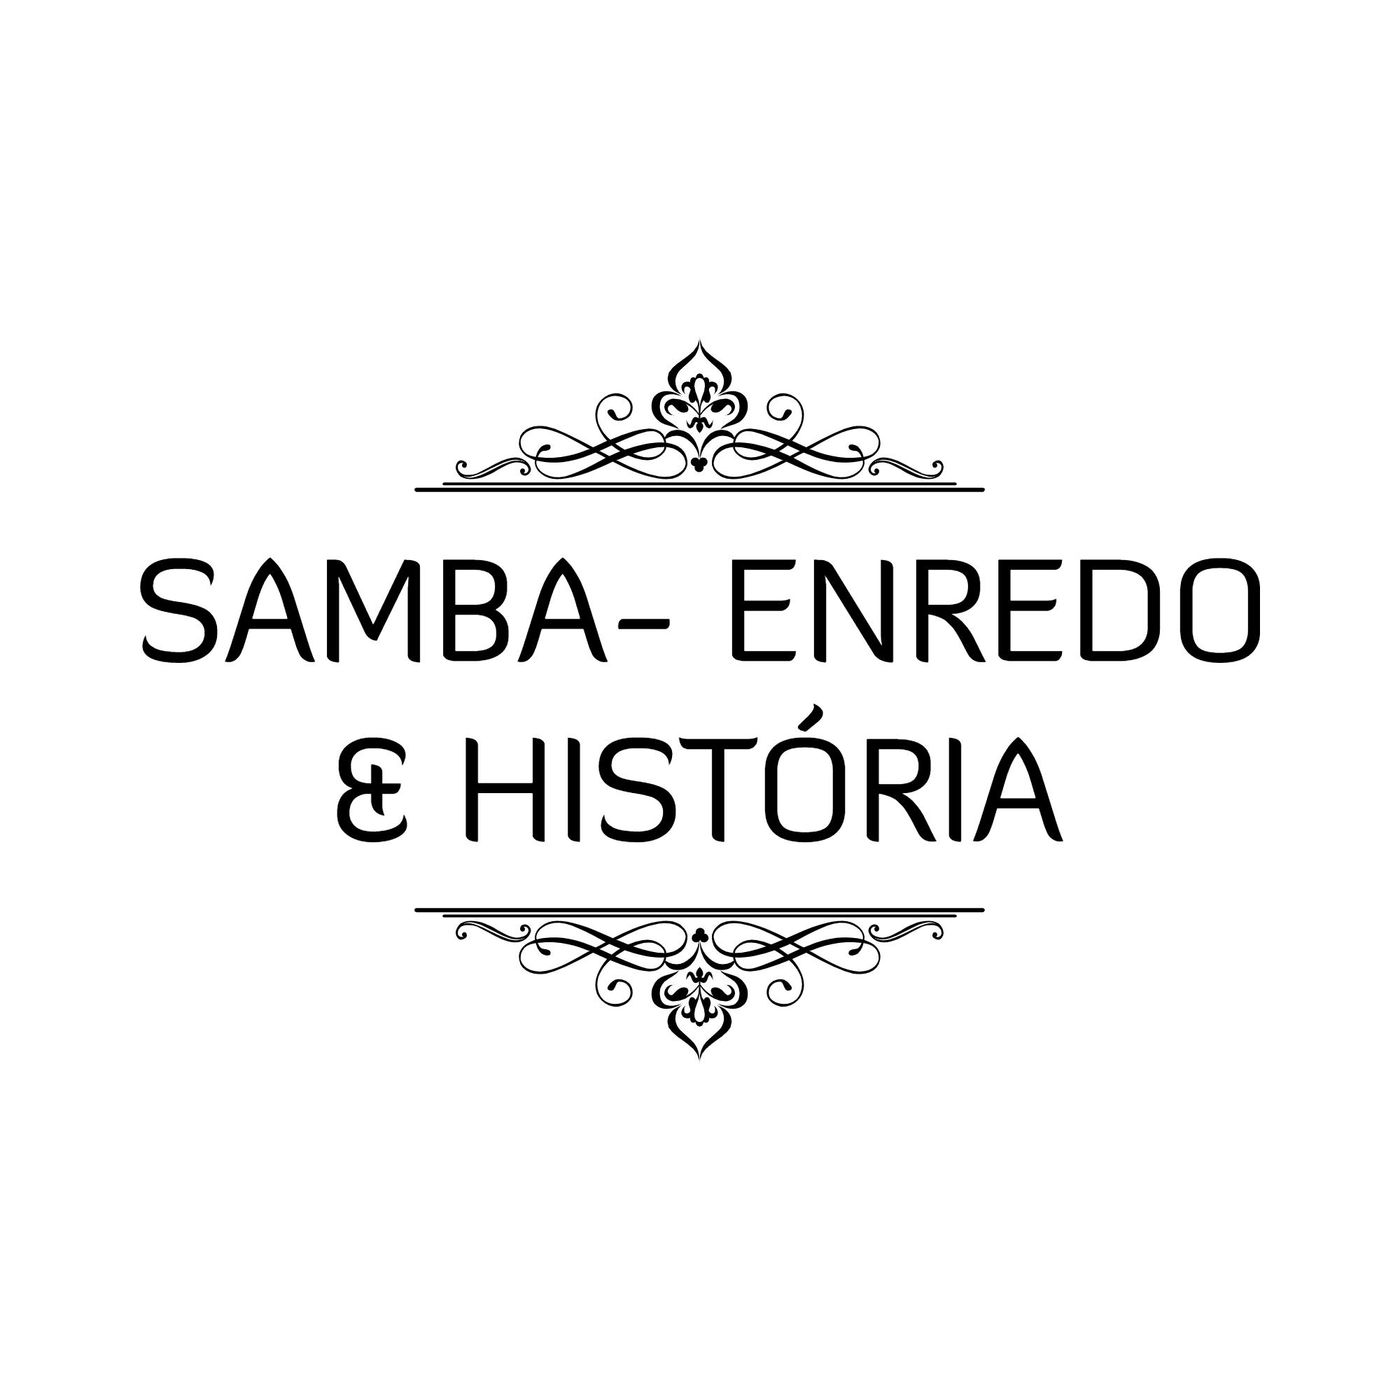 Samba-enredo & História